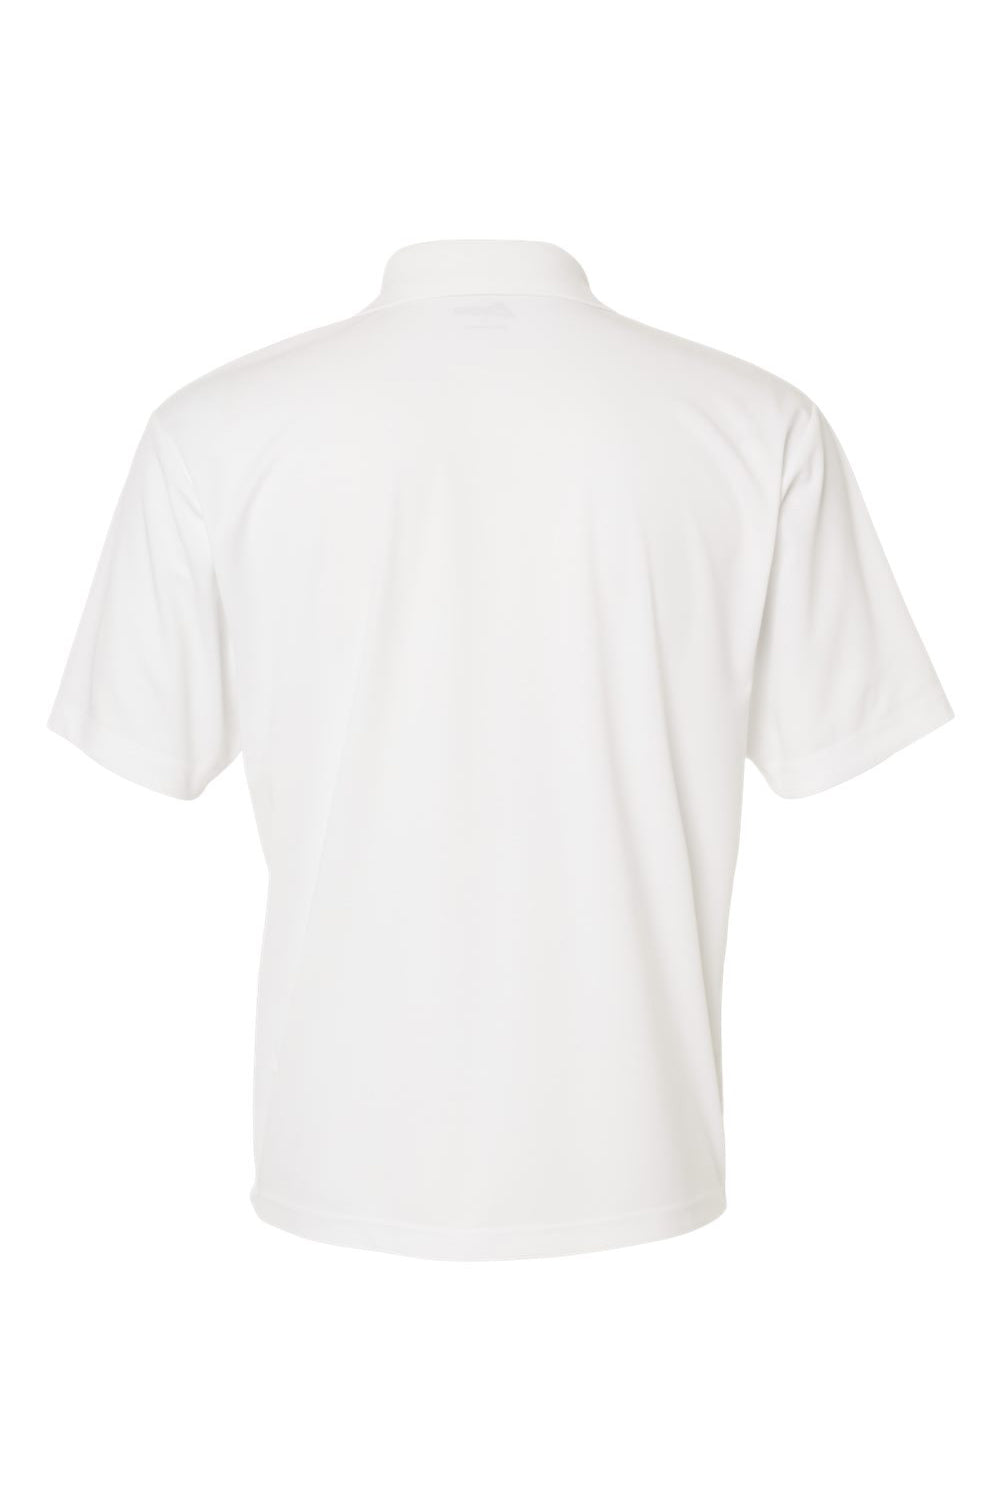 Paragon 500 Mens Sebring Performance Short Sleeve Polo Shirt White Flat Back